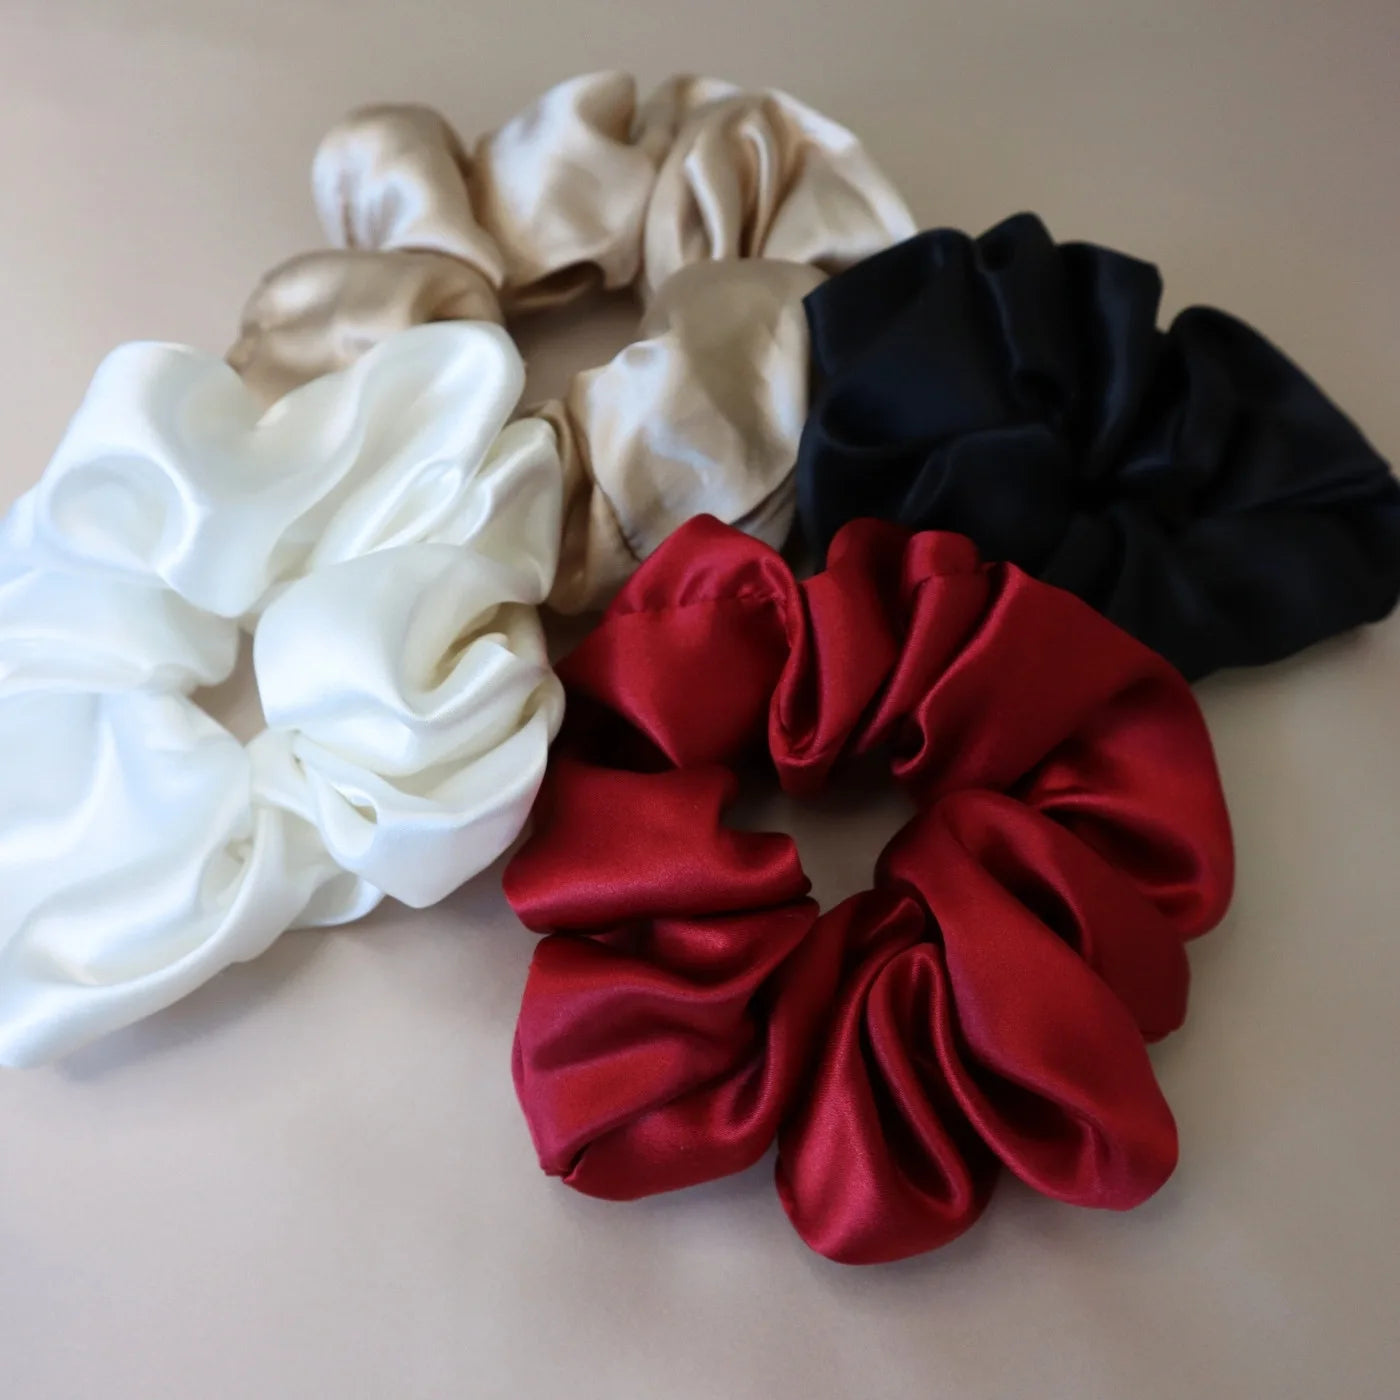 4 Silk Hair Scrunchie Ties Set - Red, White, Gold, Black